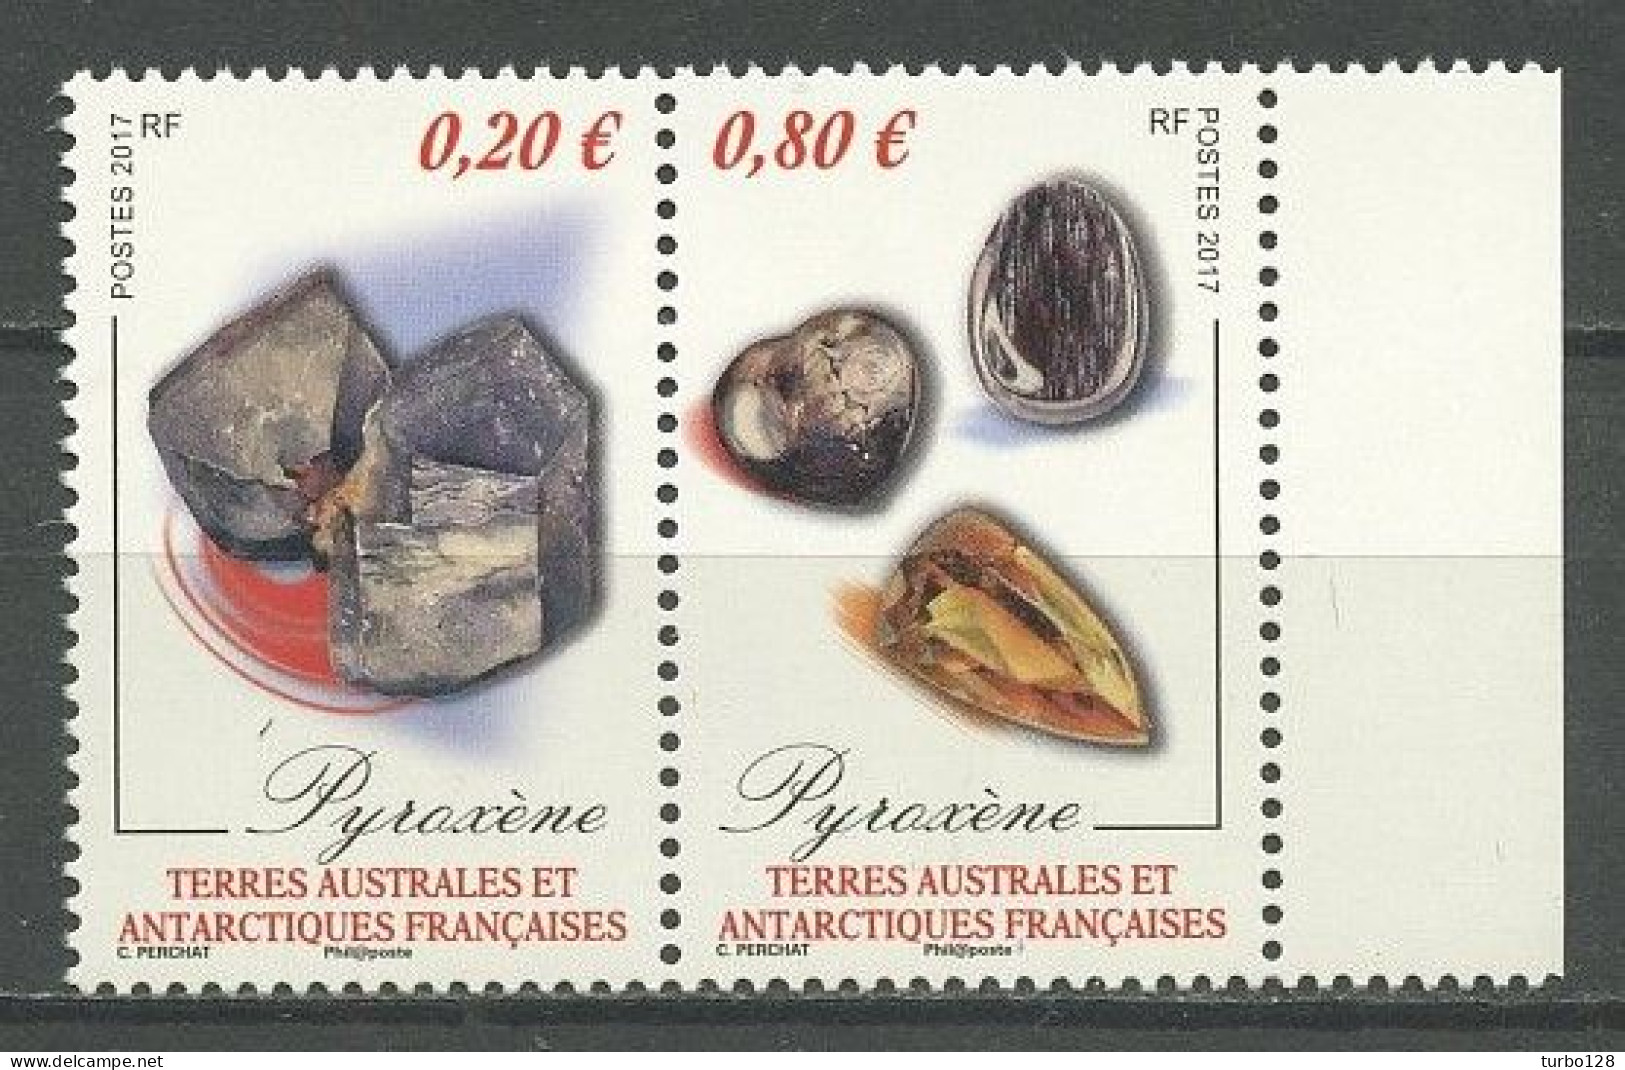 TAAF 2017  N° 796/797 ** Neufs MNH Superbes Minéraux Pyroxène Géologie Minerals - Unused Stamps